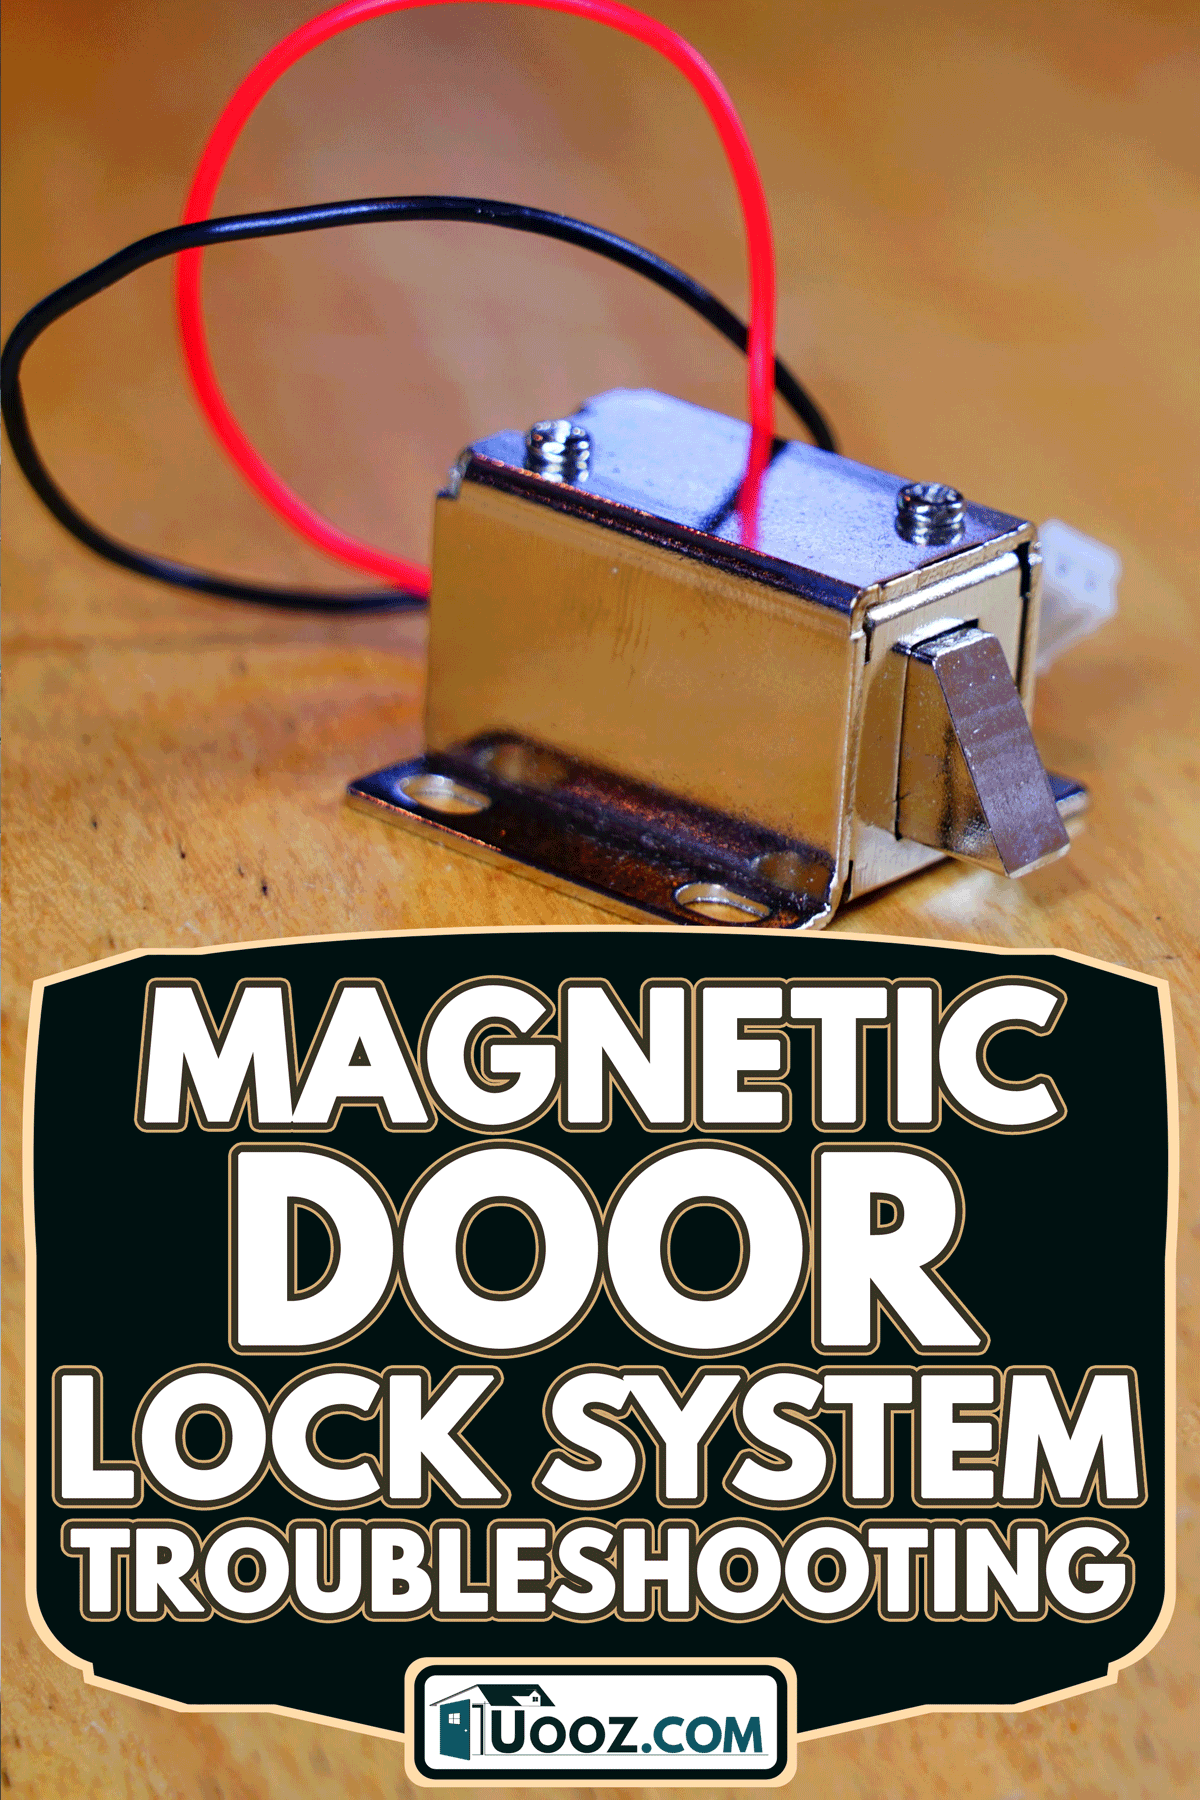 Detail of magnetic hard lock armored for door, Magnetic Door Lock System Troubleshooting